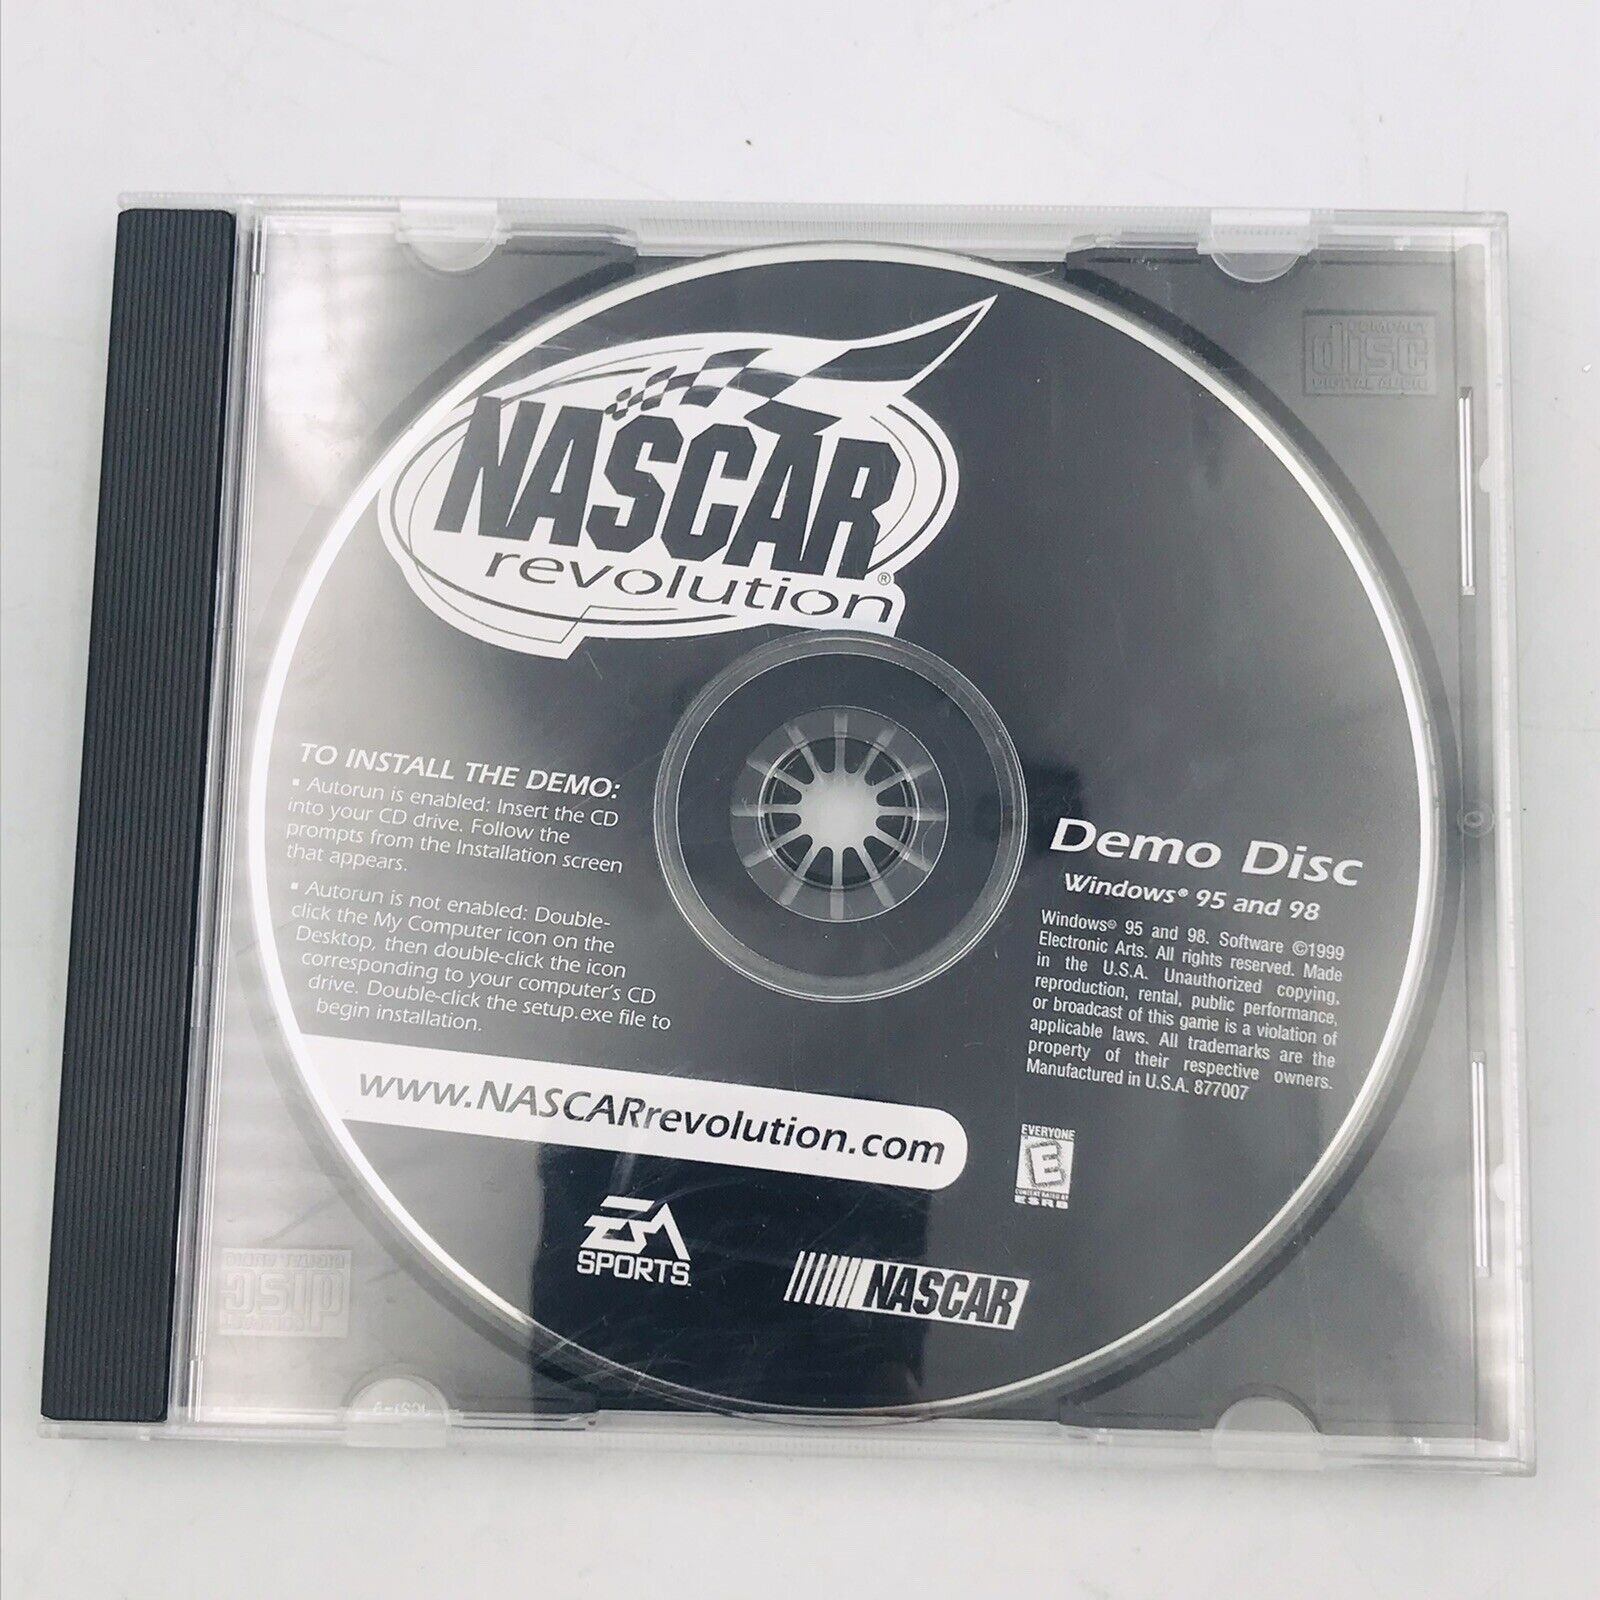 Vintage 1999 Nascar Revolution Demo Disc EA Sports Windows 95 & 98 